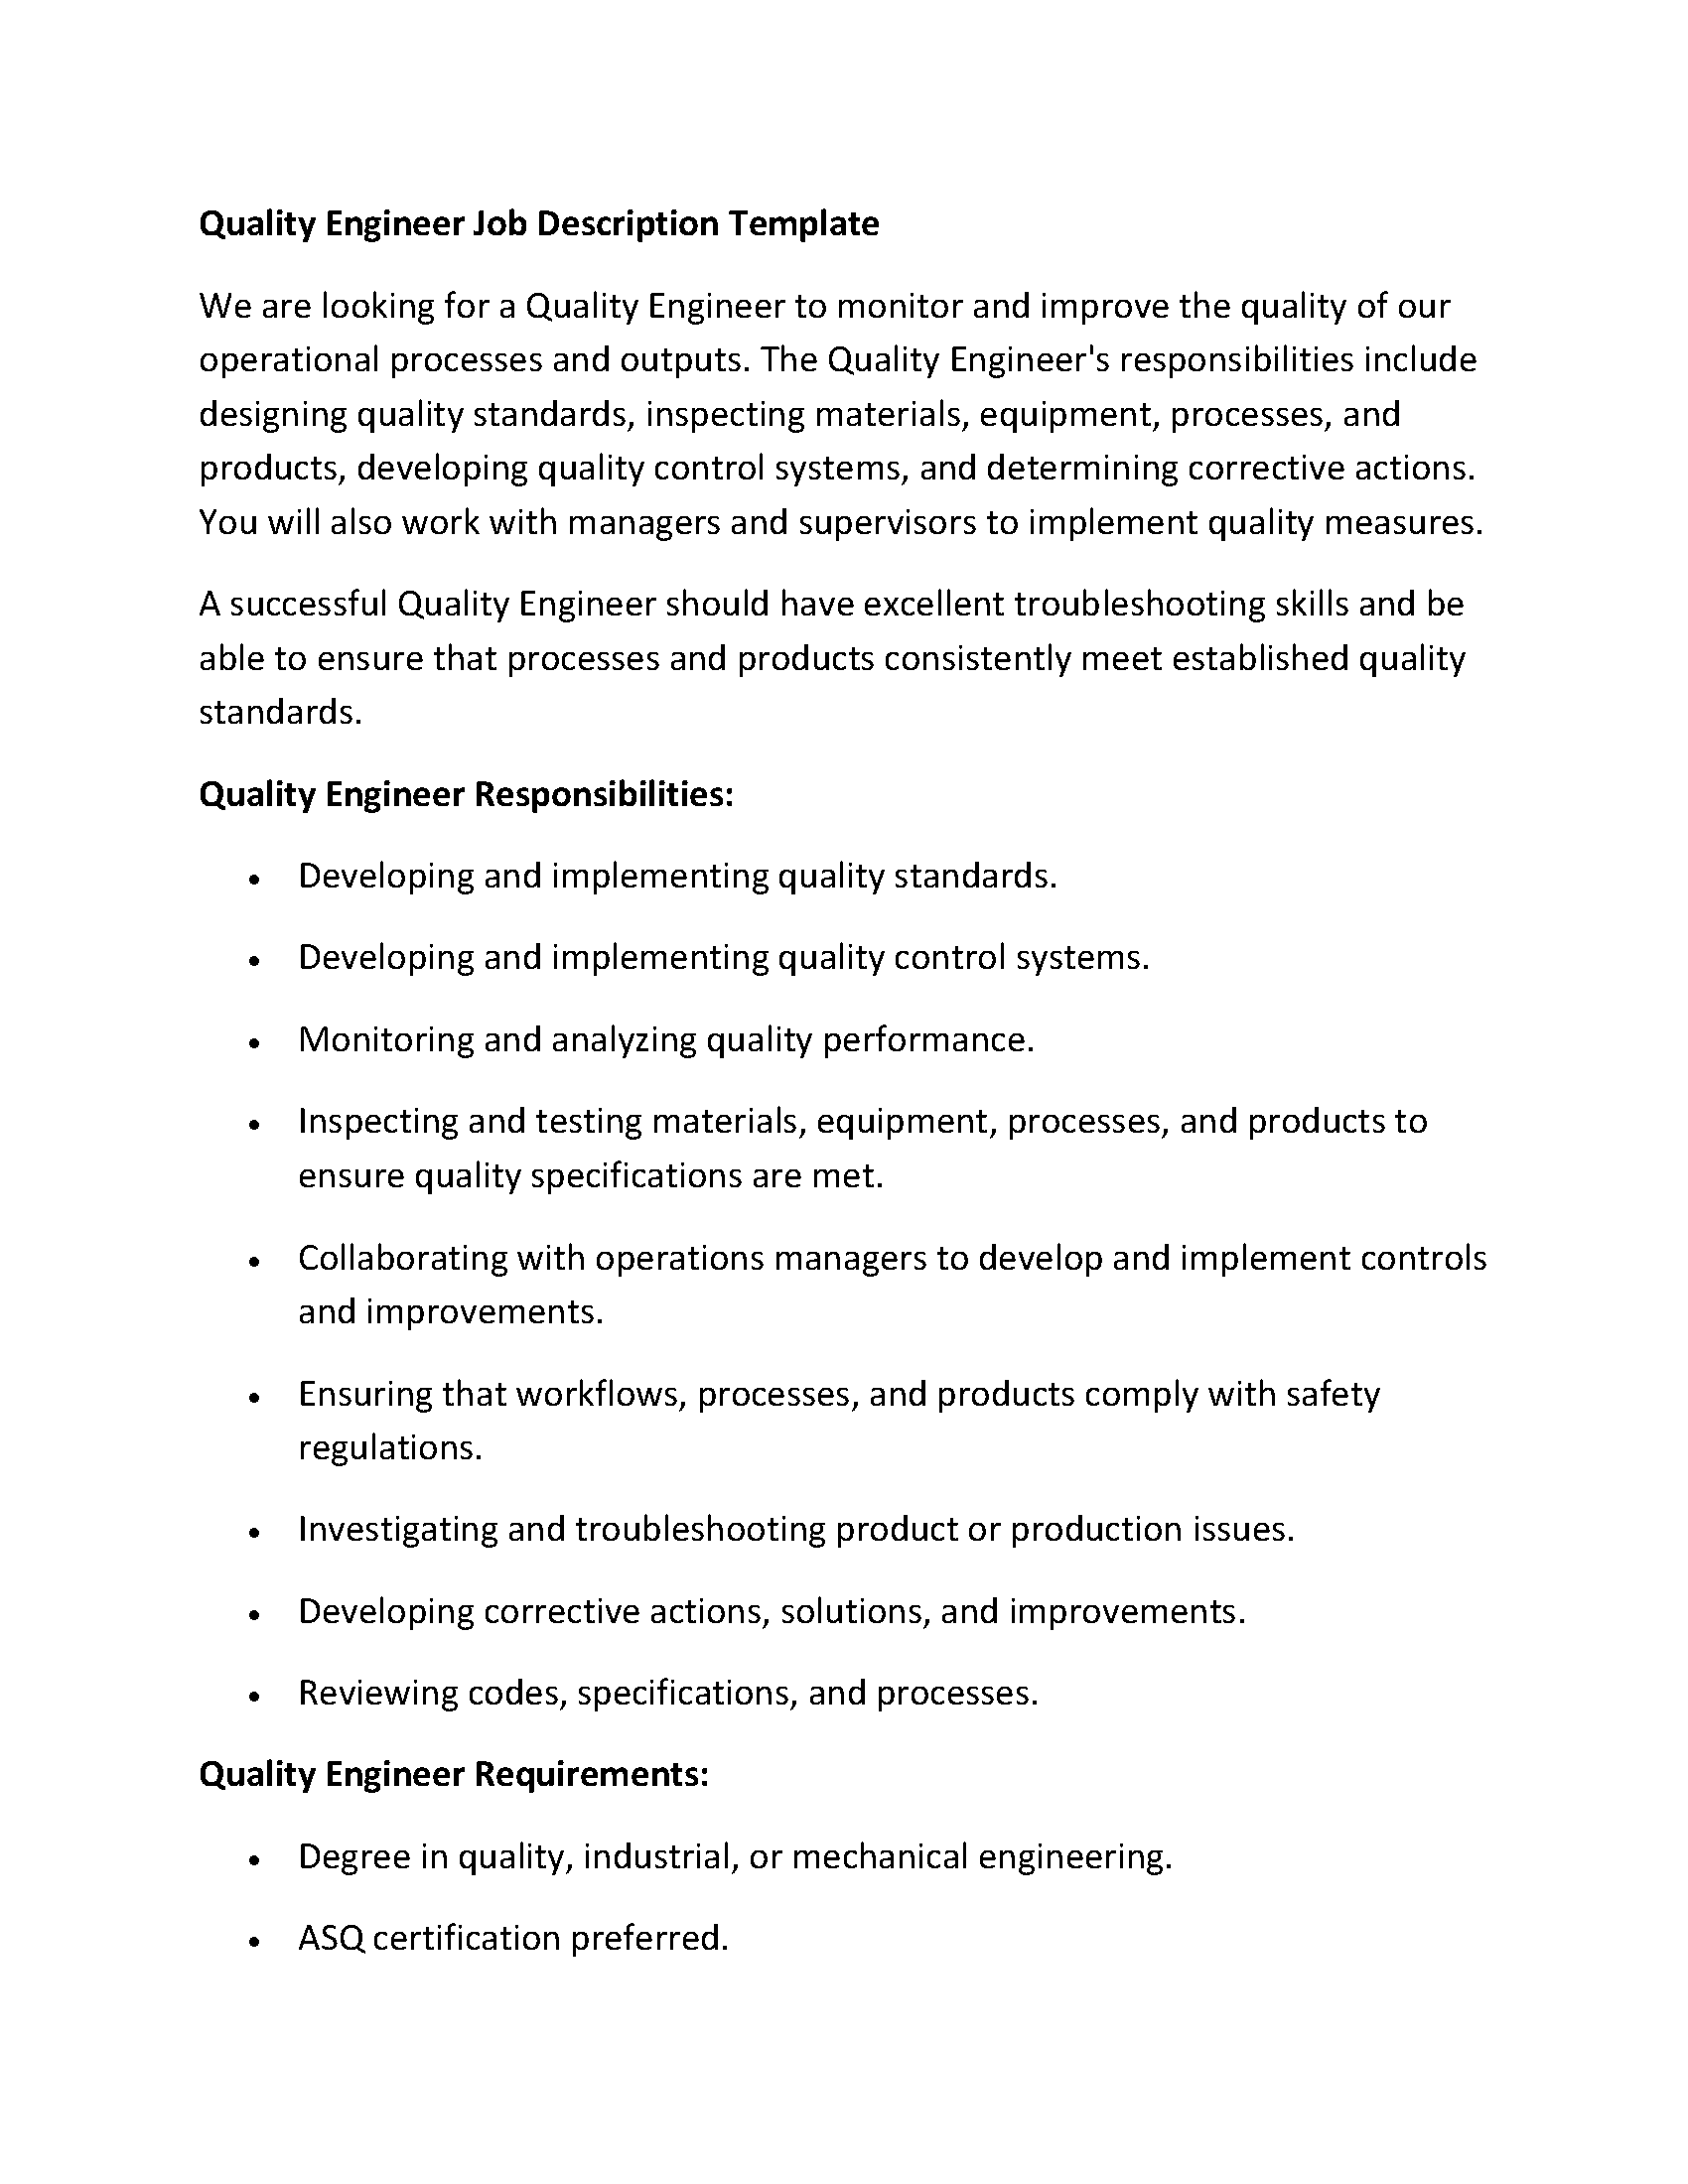 Quality Engineer Job Description Template